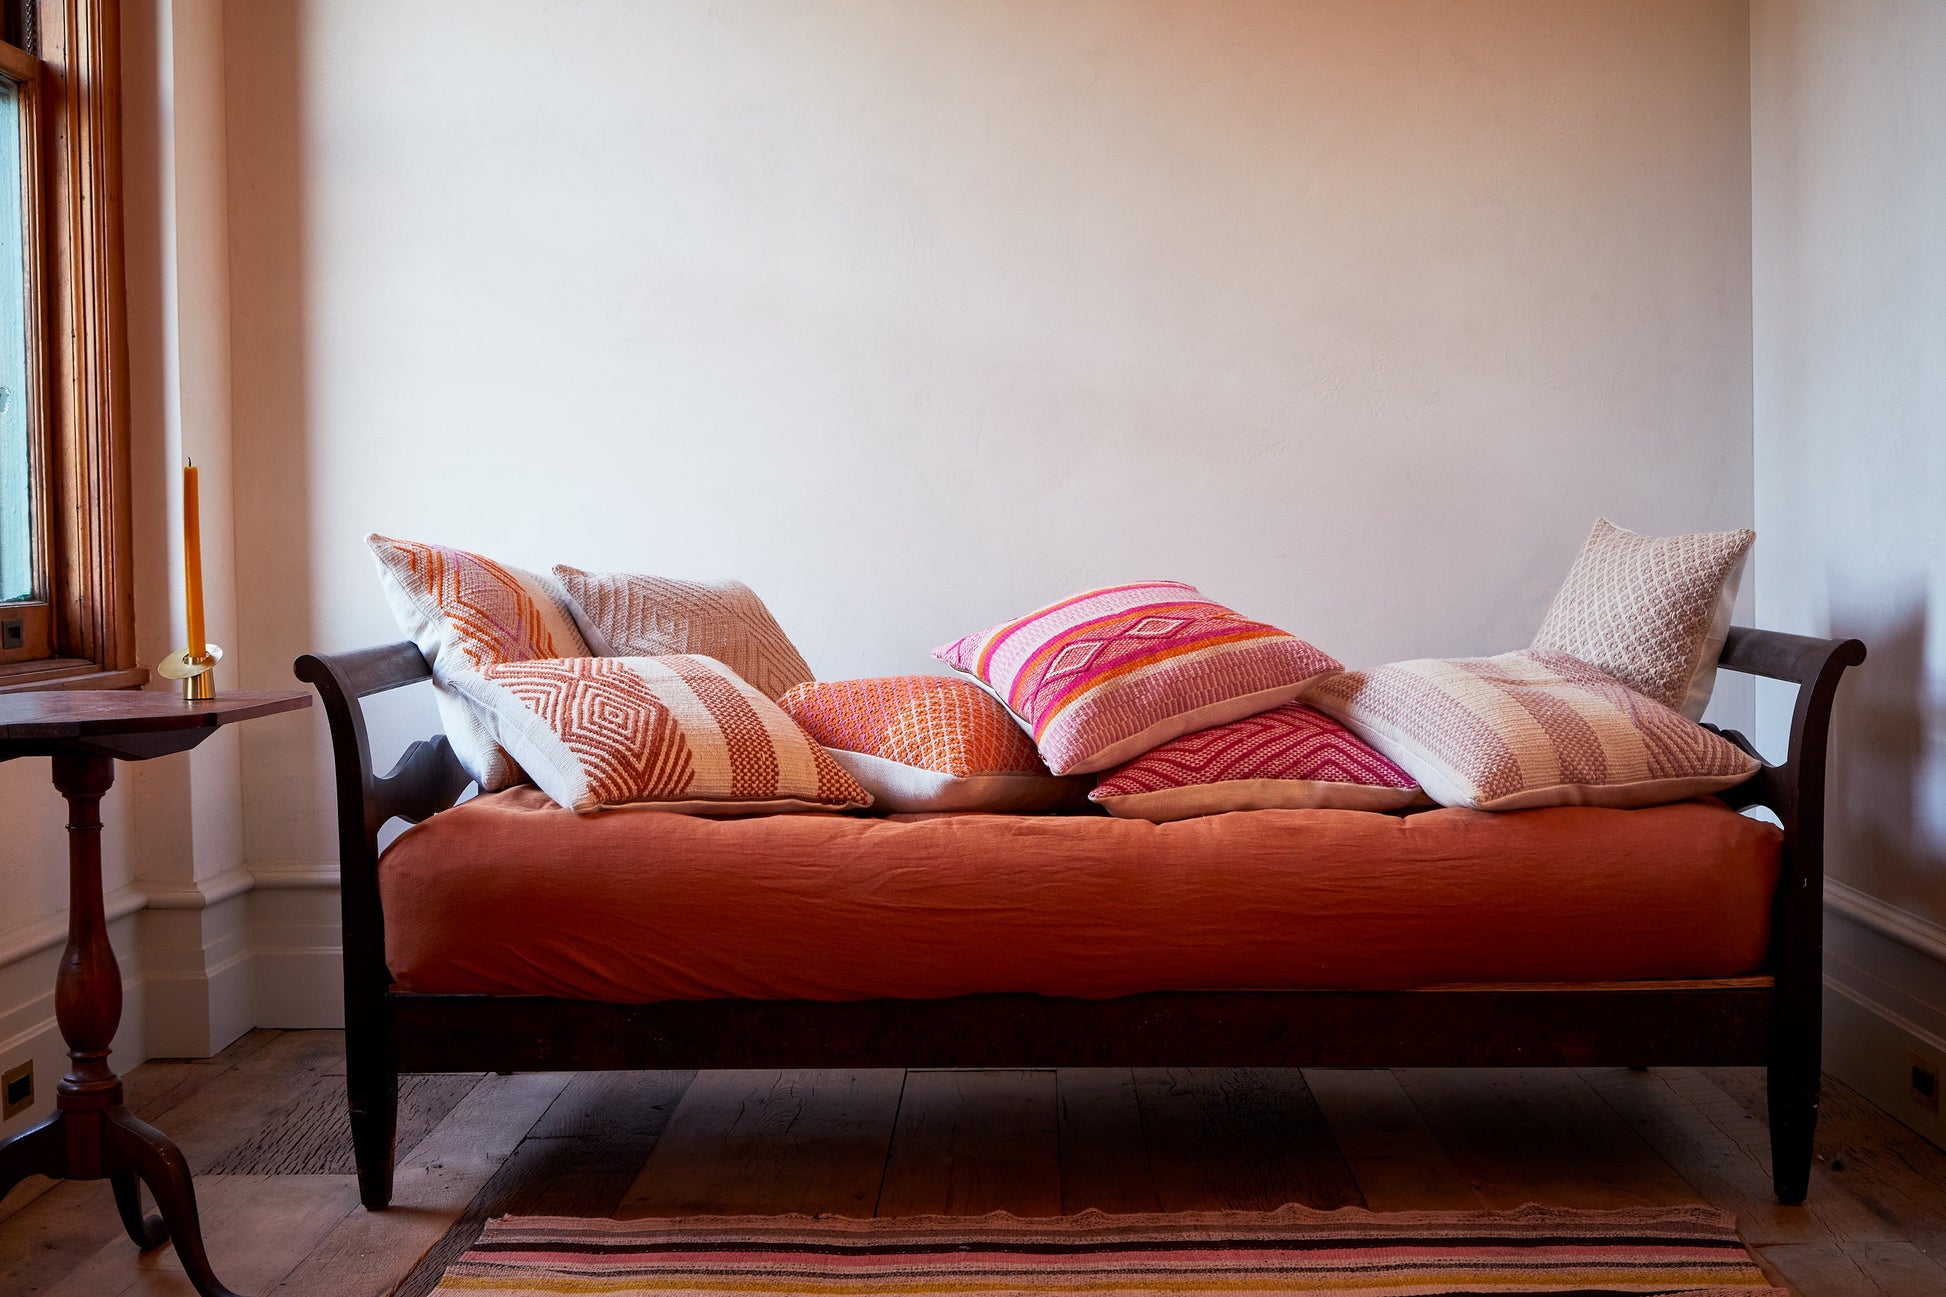 sacred valley throw pillow handloom woven wool frazada pillow peruvian magenta orange vibrant color pop spring living